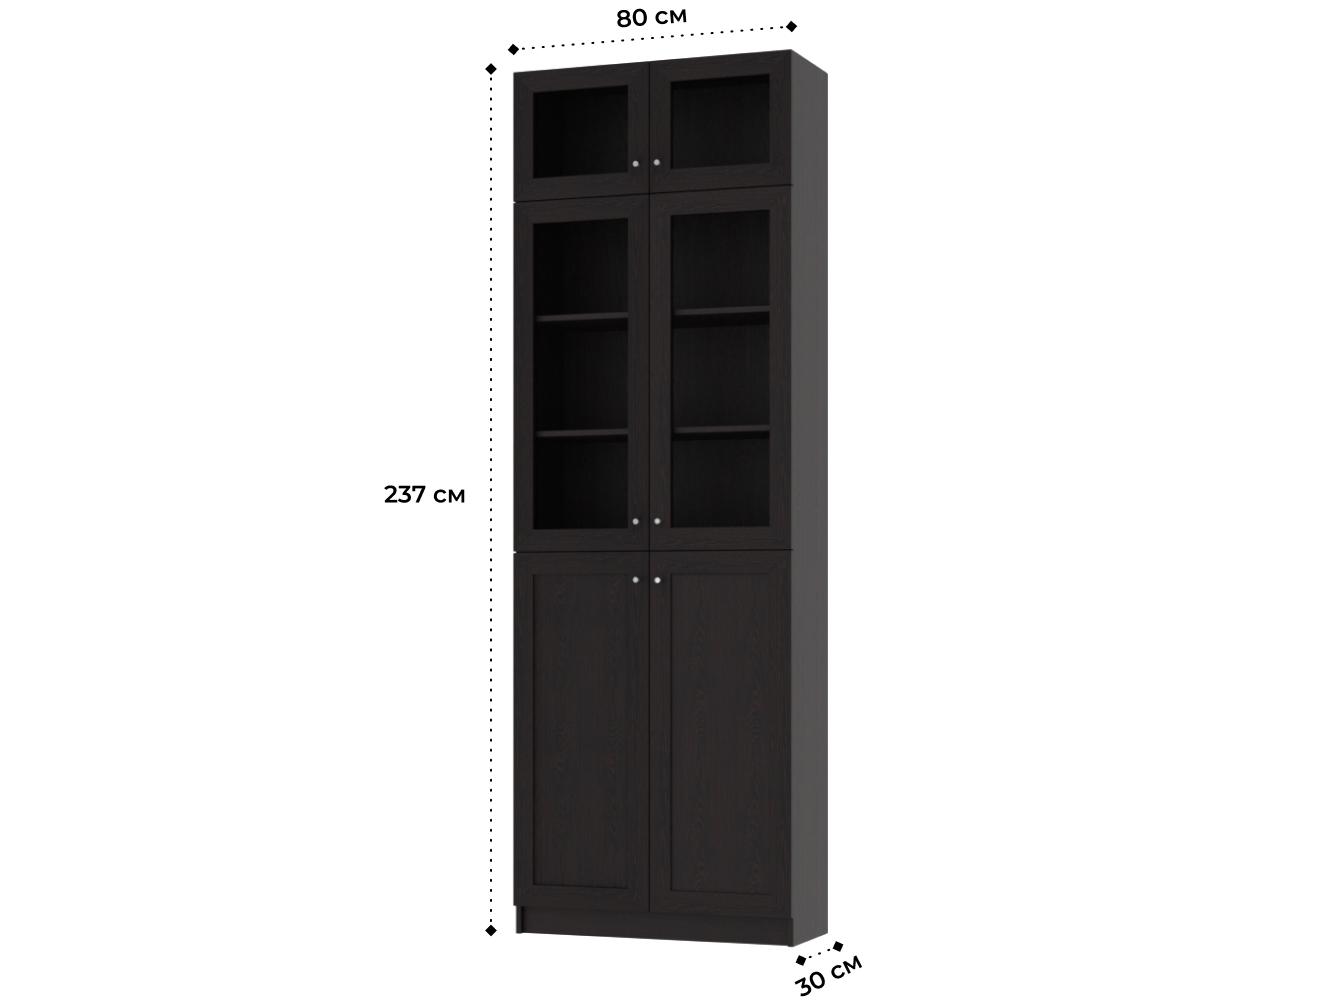 Книжный шкаф Билли 352 wenge tsava ИКЕА (IKEA) изображение товара